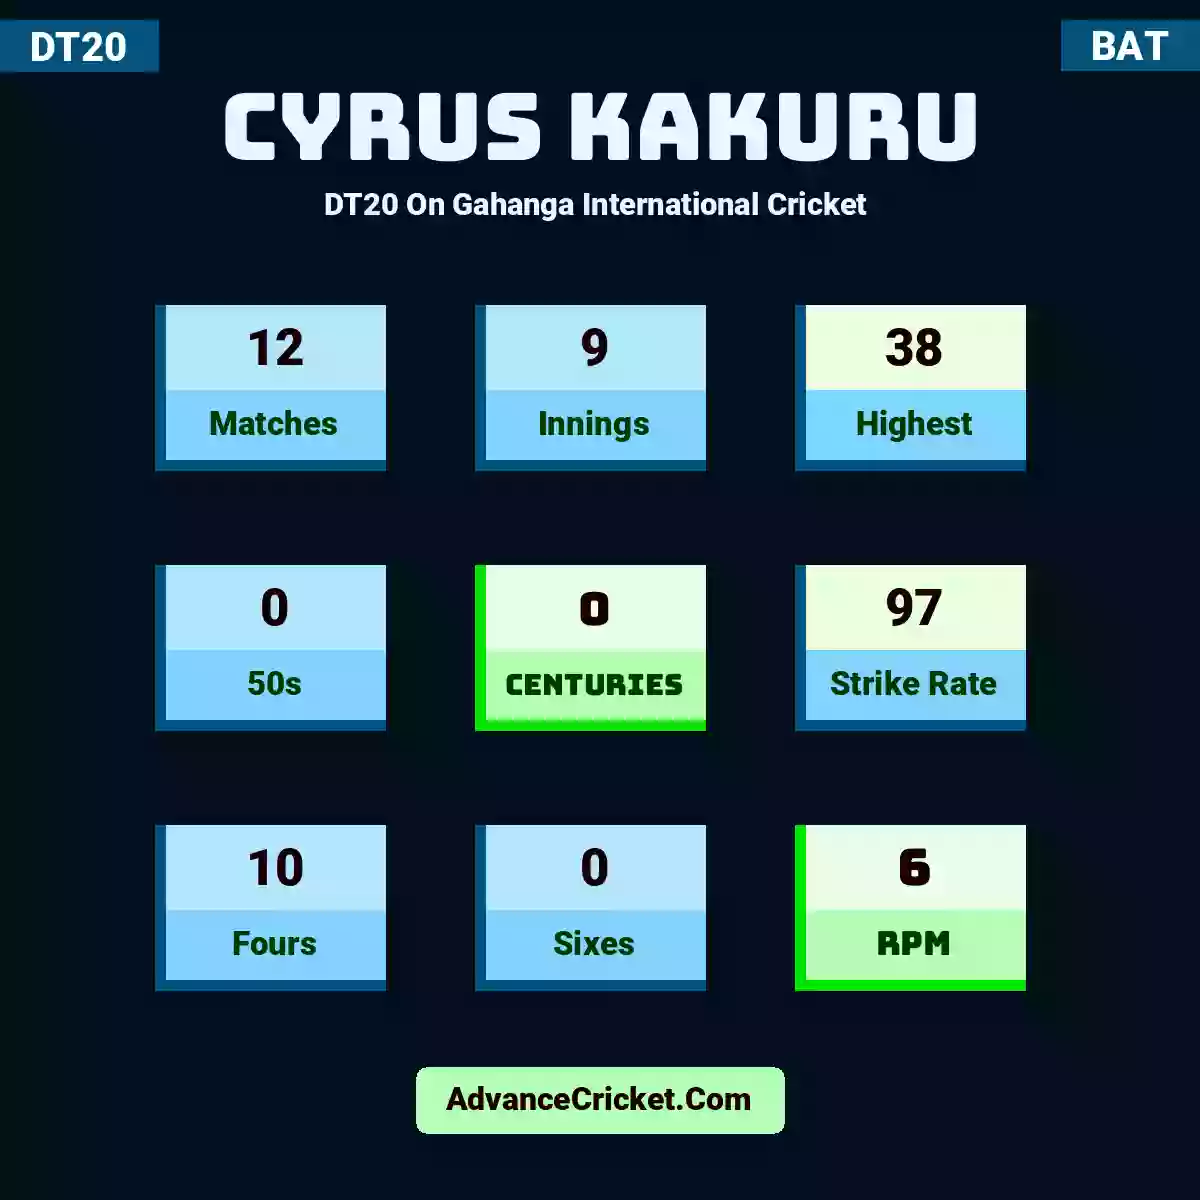 Cyrus Kakuru DT20  On Gahanga International Cricket , Cyrus Kakuru played 12 matches, scored 38 runs as highest, 0 half-centuries, and 0 centuries, with a strike rate of 97. C.Kakuru hit 10 fours and 0 sixes, with an RPM of 6.